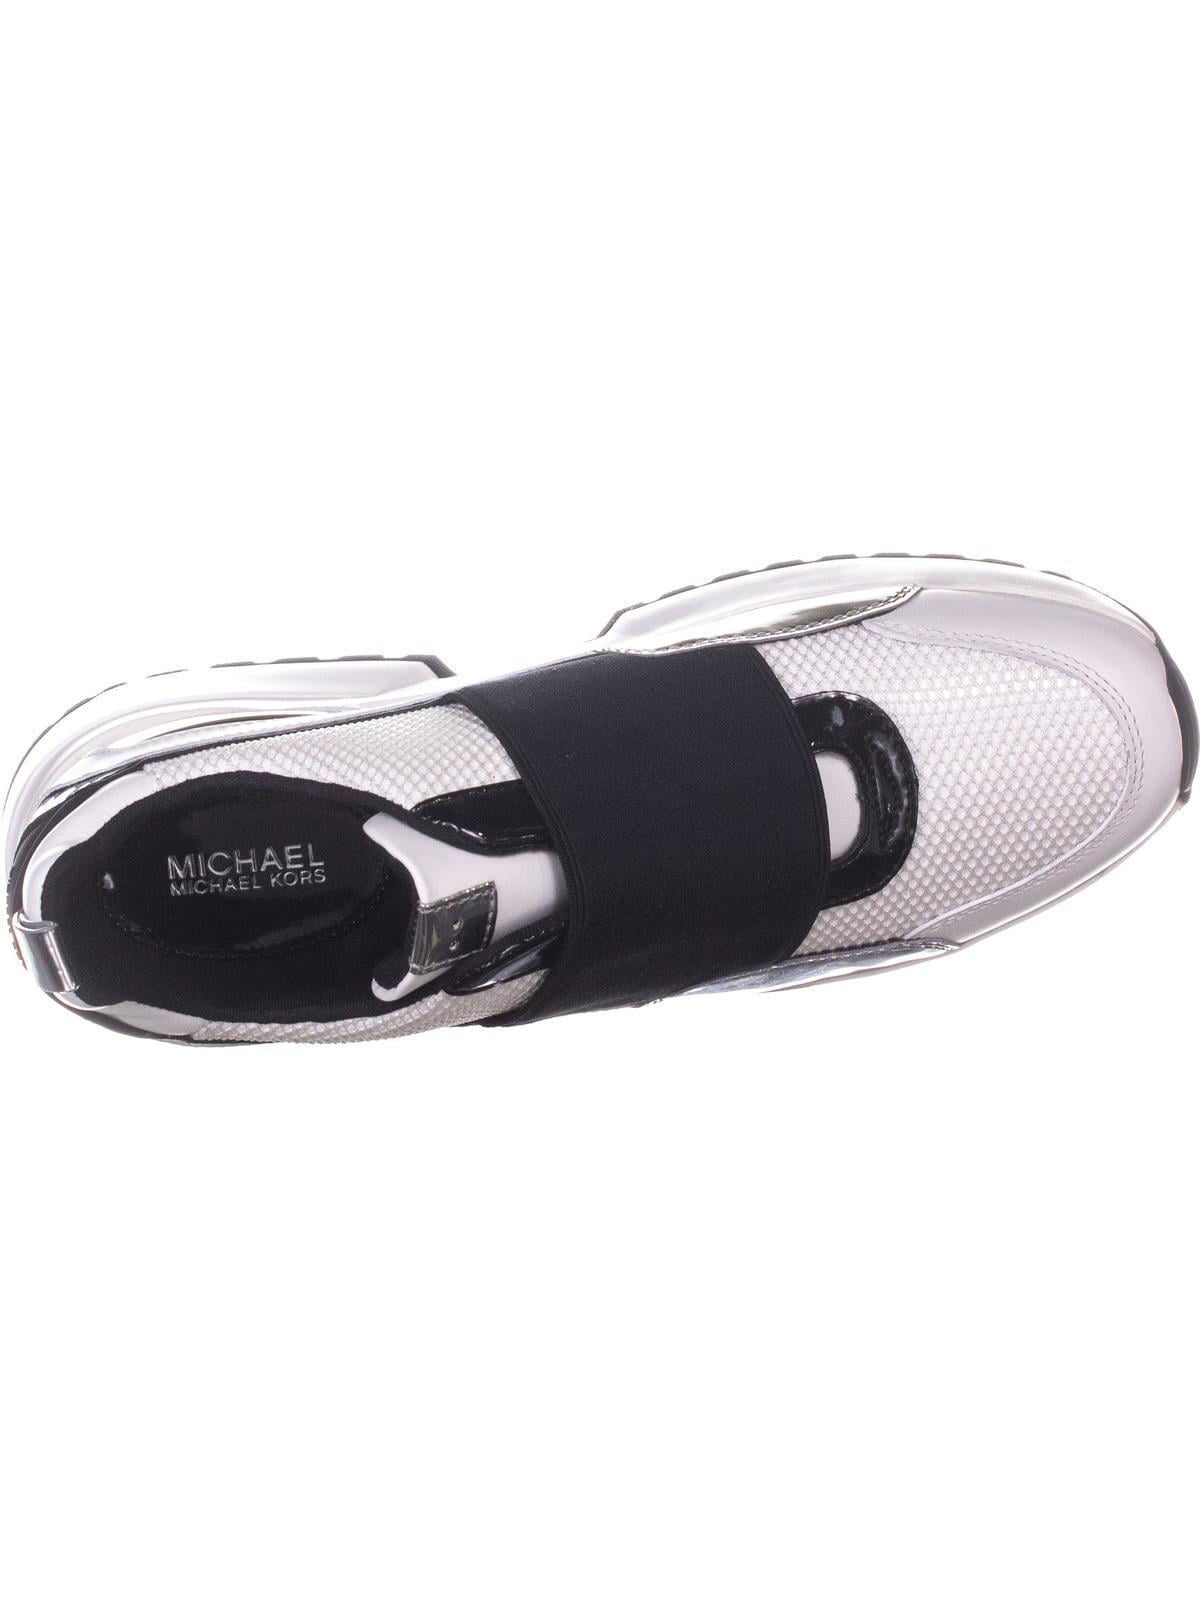 Michael Kors Cosmo Trainer Sneakers | Michael kors shoes sneakers, Michael  kors sneakers, Sneaker brands